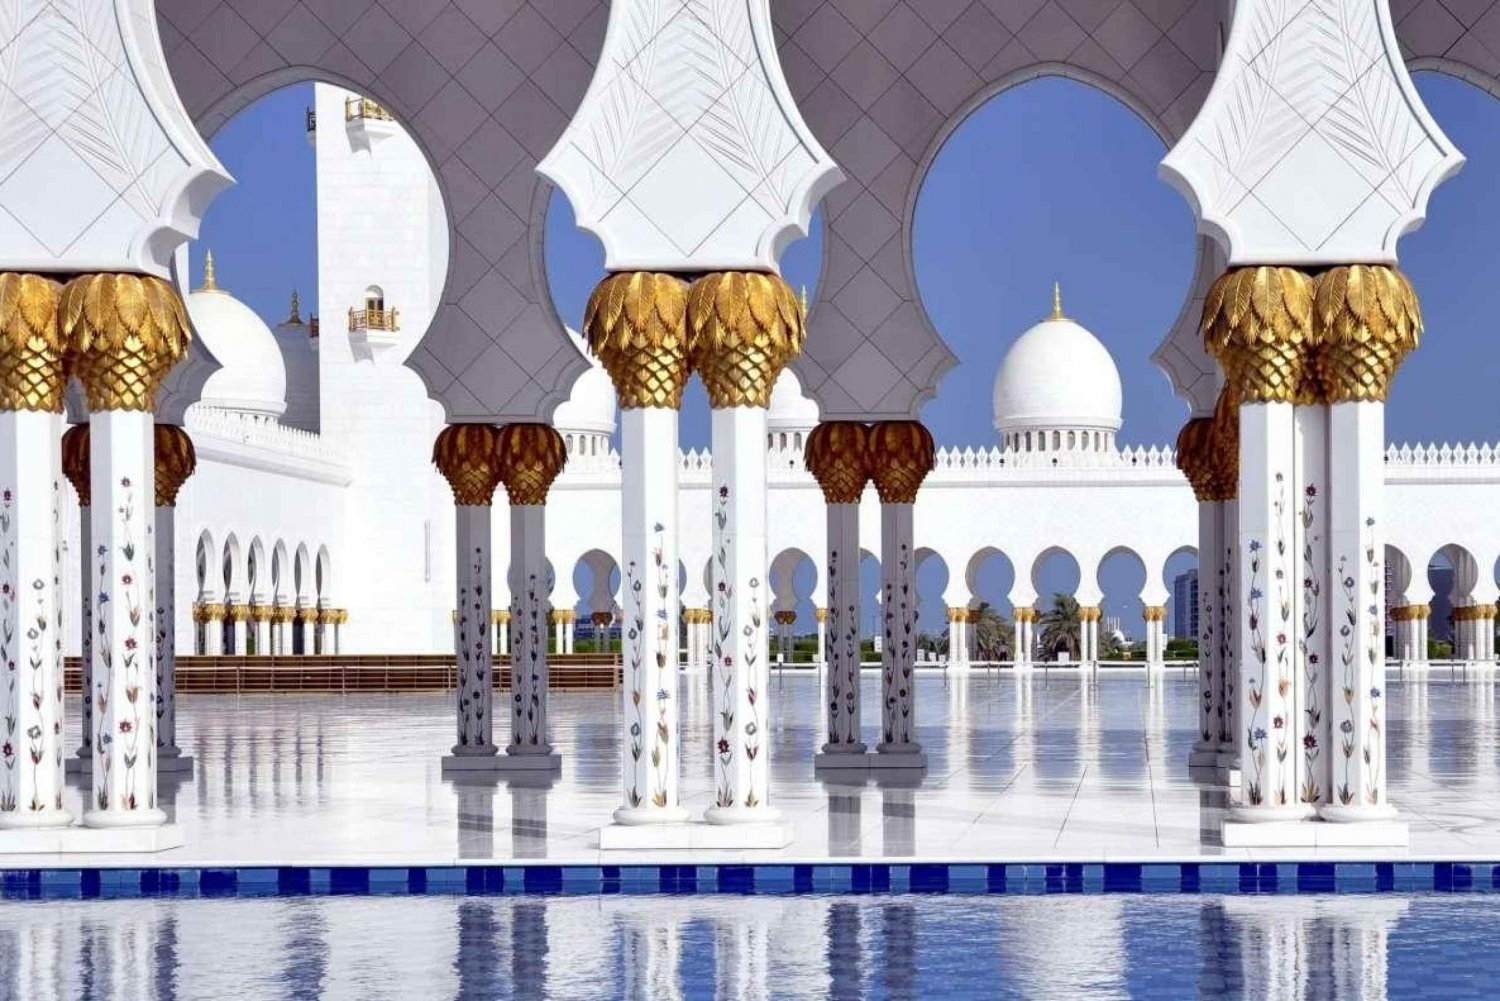 Fra Dubai til Abu Dhabi - moské, palasser og kulturarv i SUV